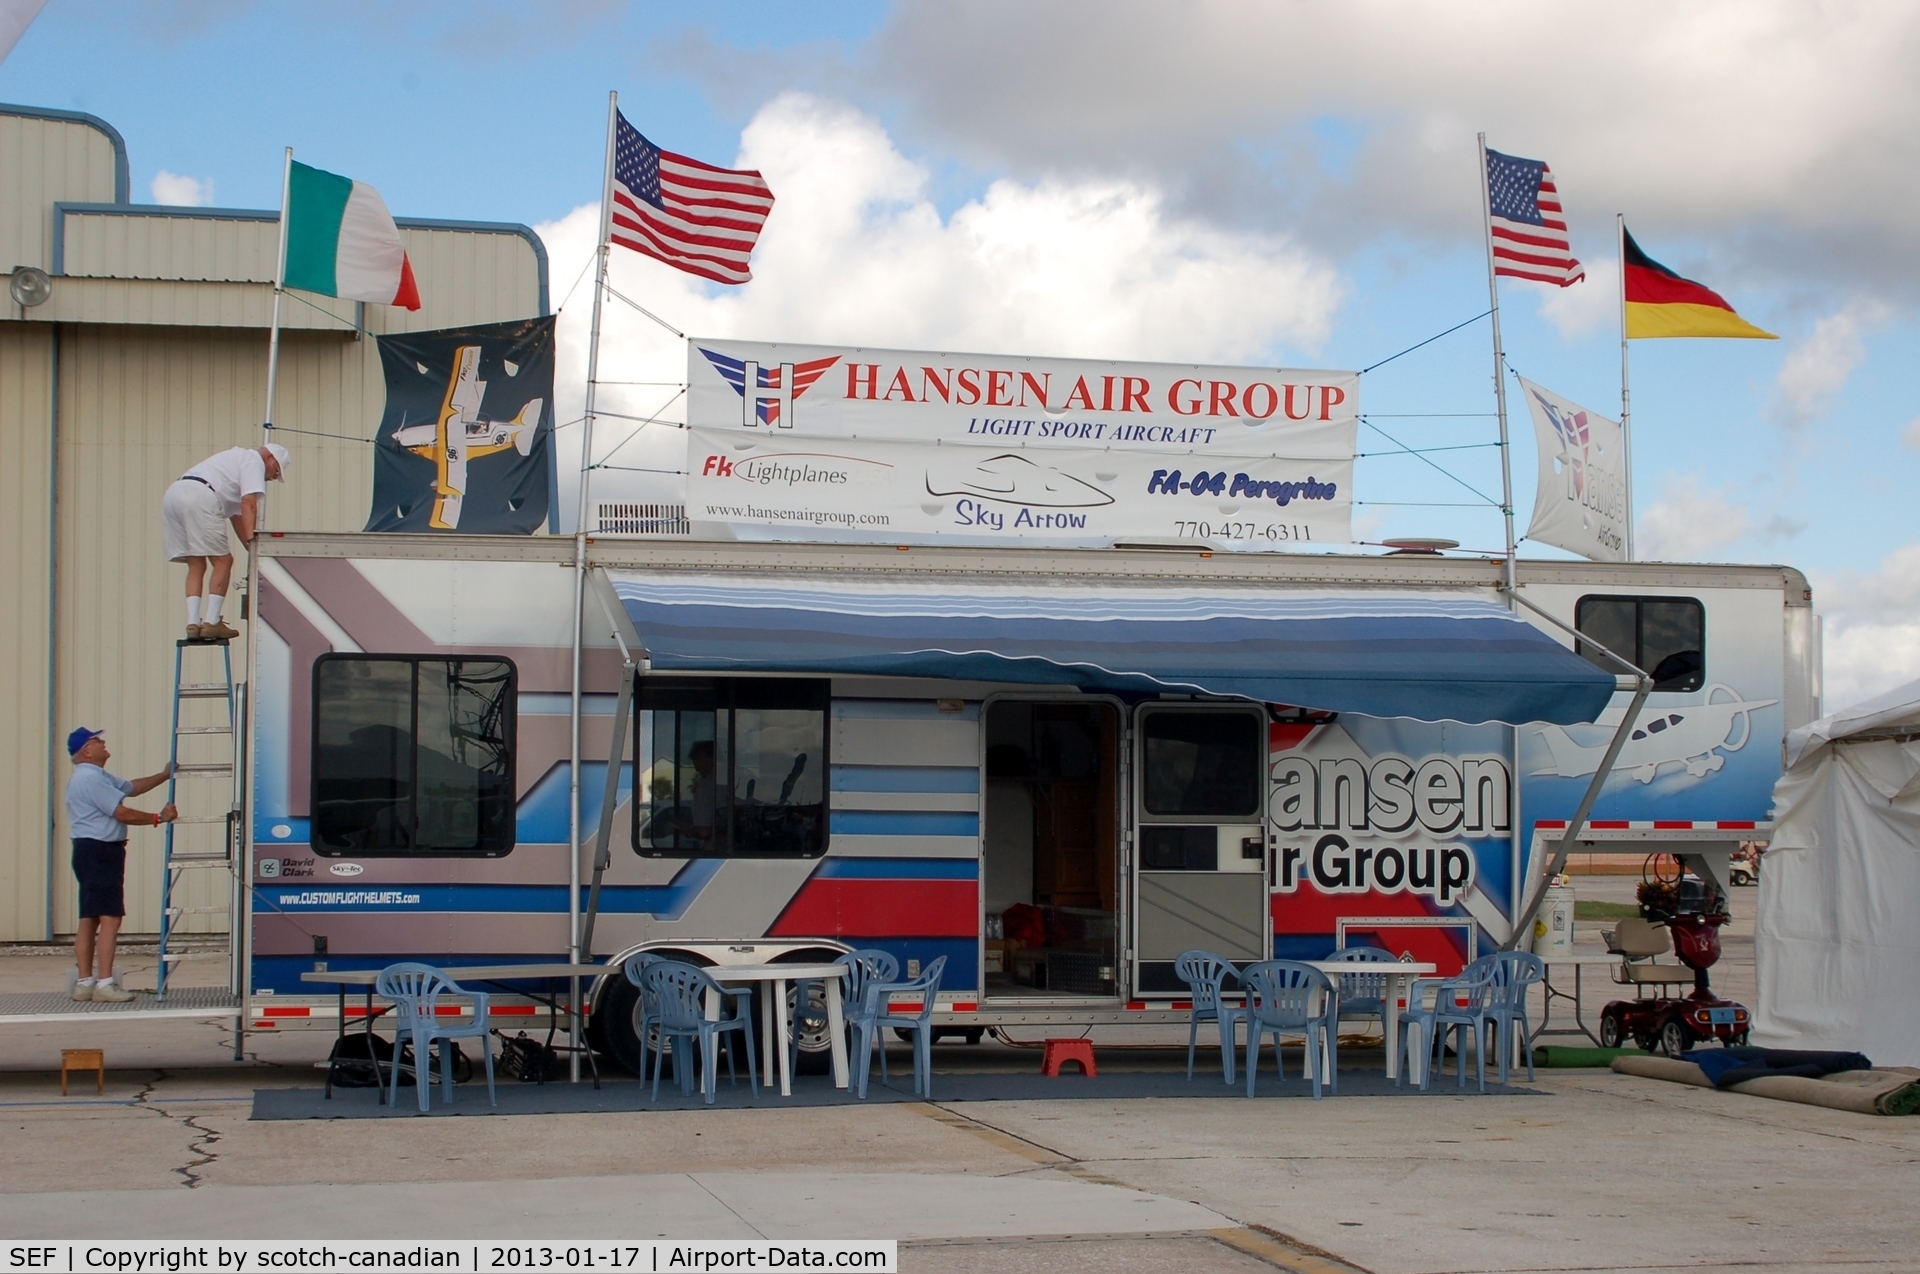 Sebring Regional Airport (SEF) - Hansen Air Group display at the US Sport Aviation Expo, Sebring Regional Airport, Sebring, FL  